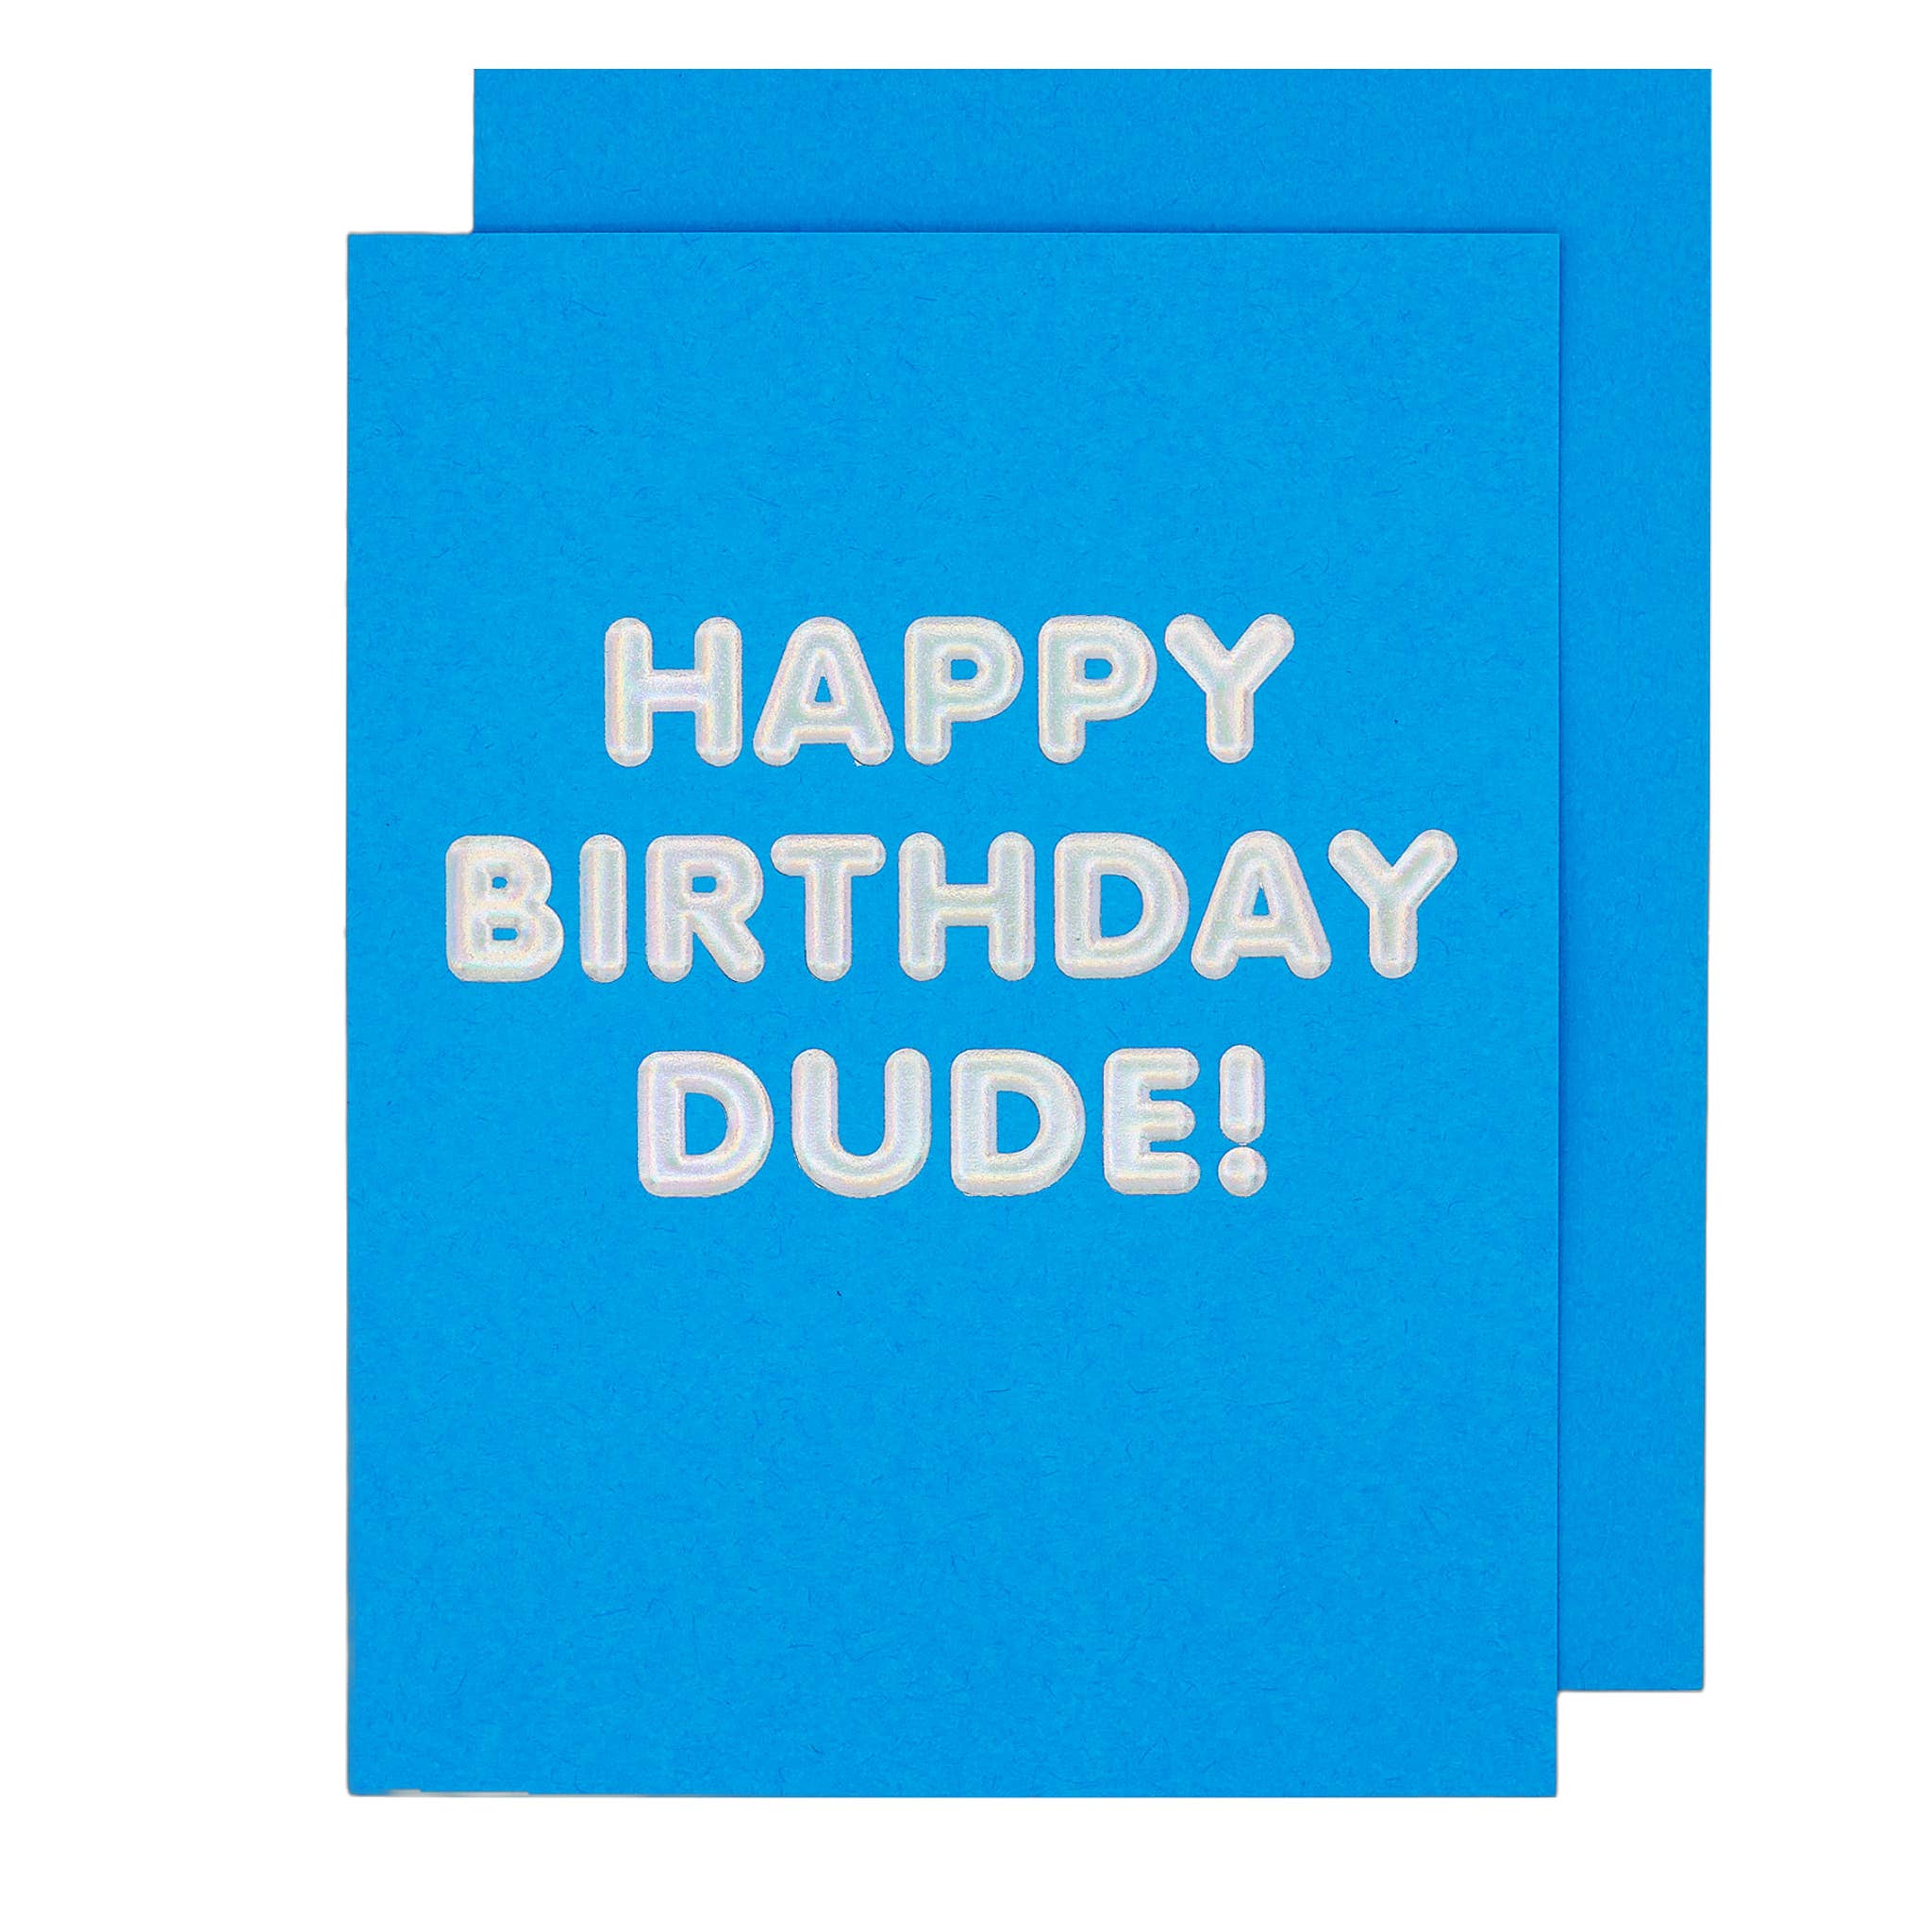 Dude Hologram Birthday Card